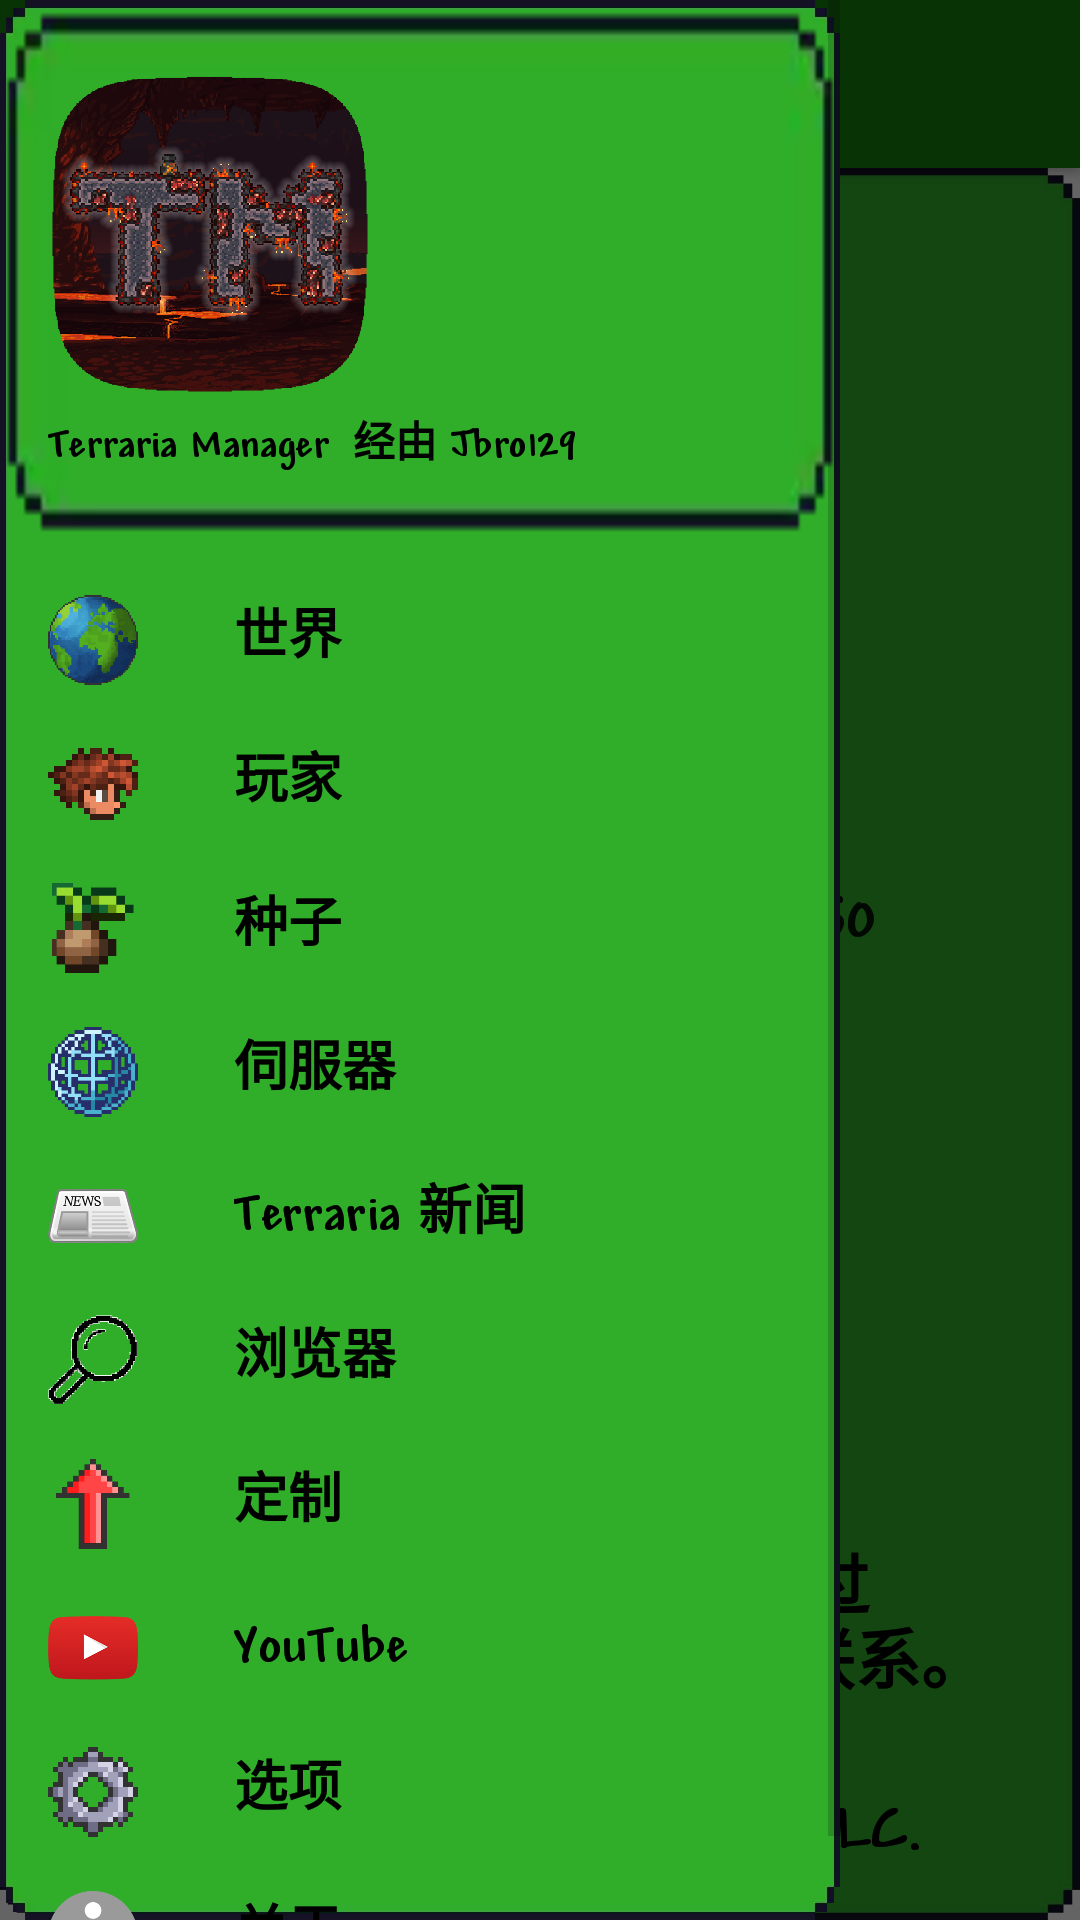 ̩ģ(Terraria Manager)v1.3.0.50 °